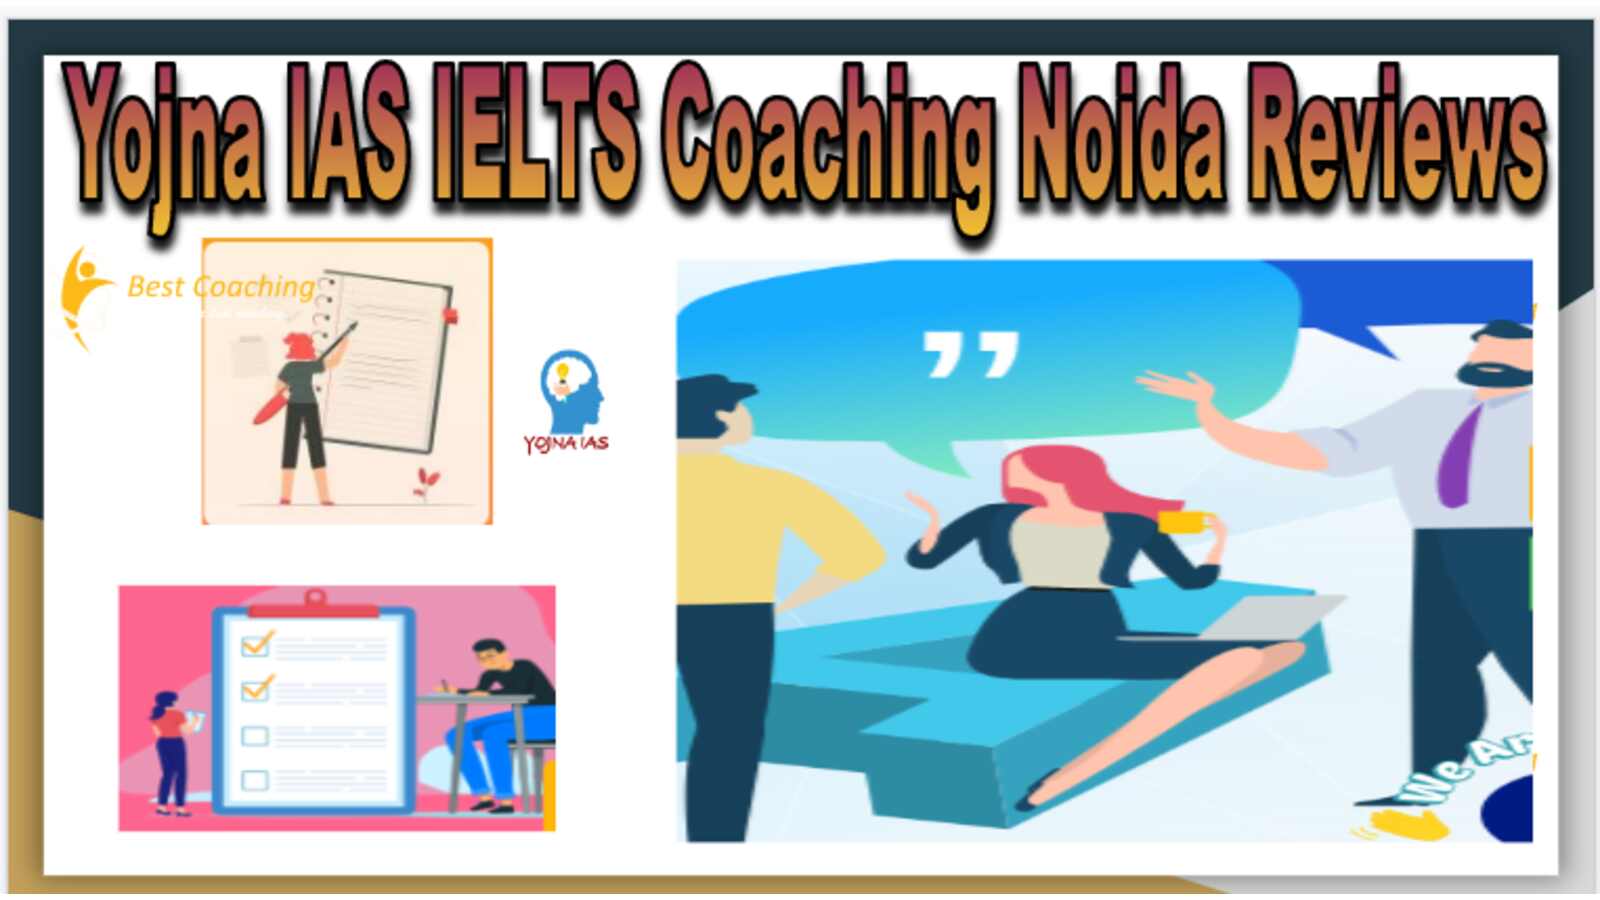 Yojna IAS IELTS Coaching Noida Reviews